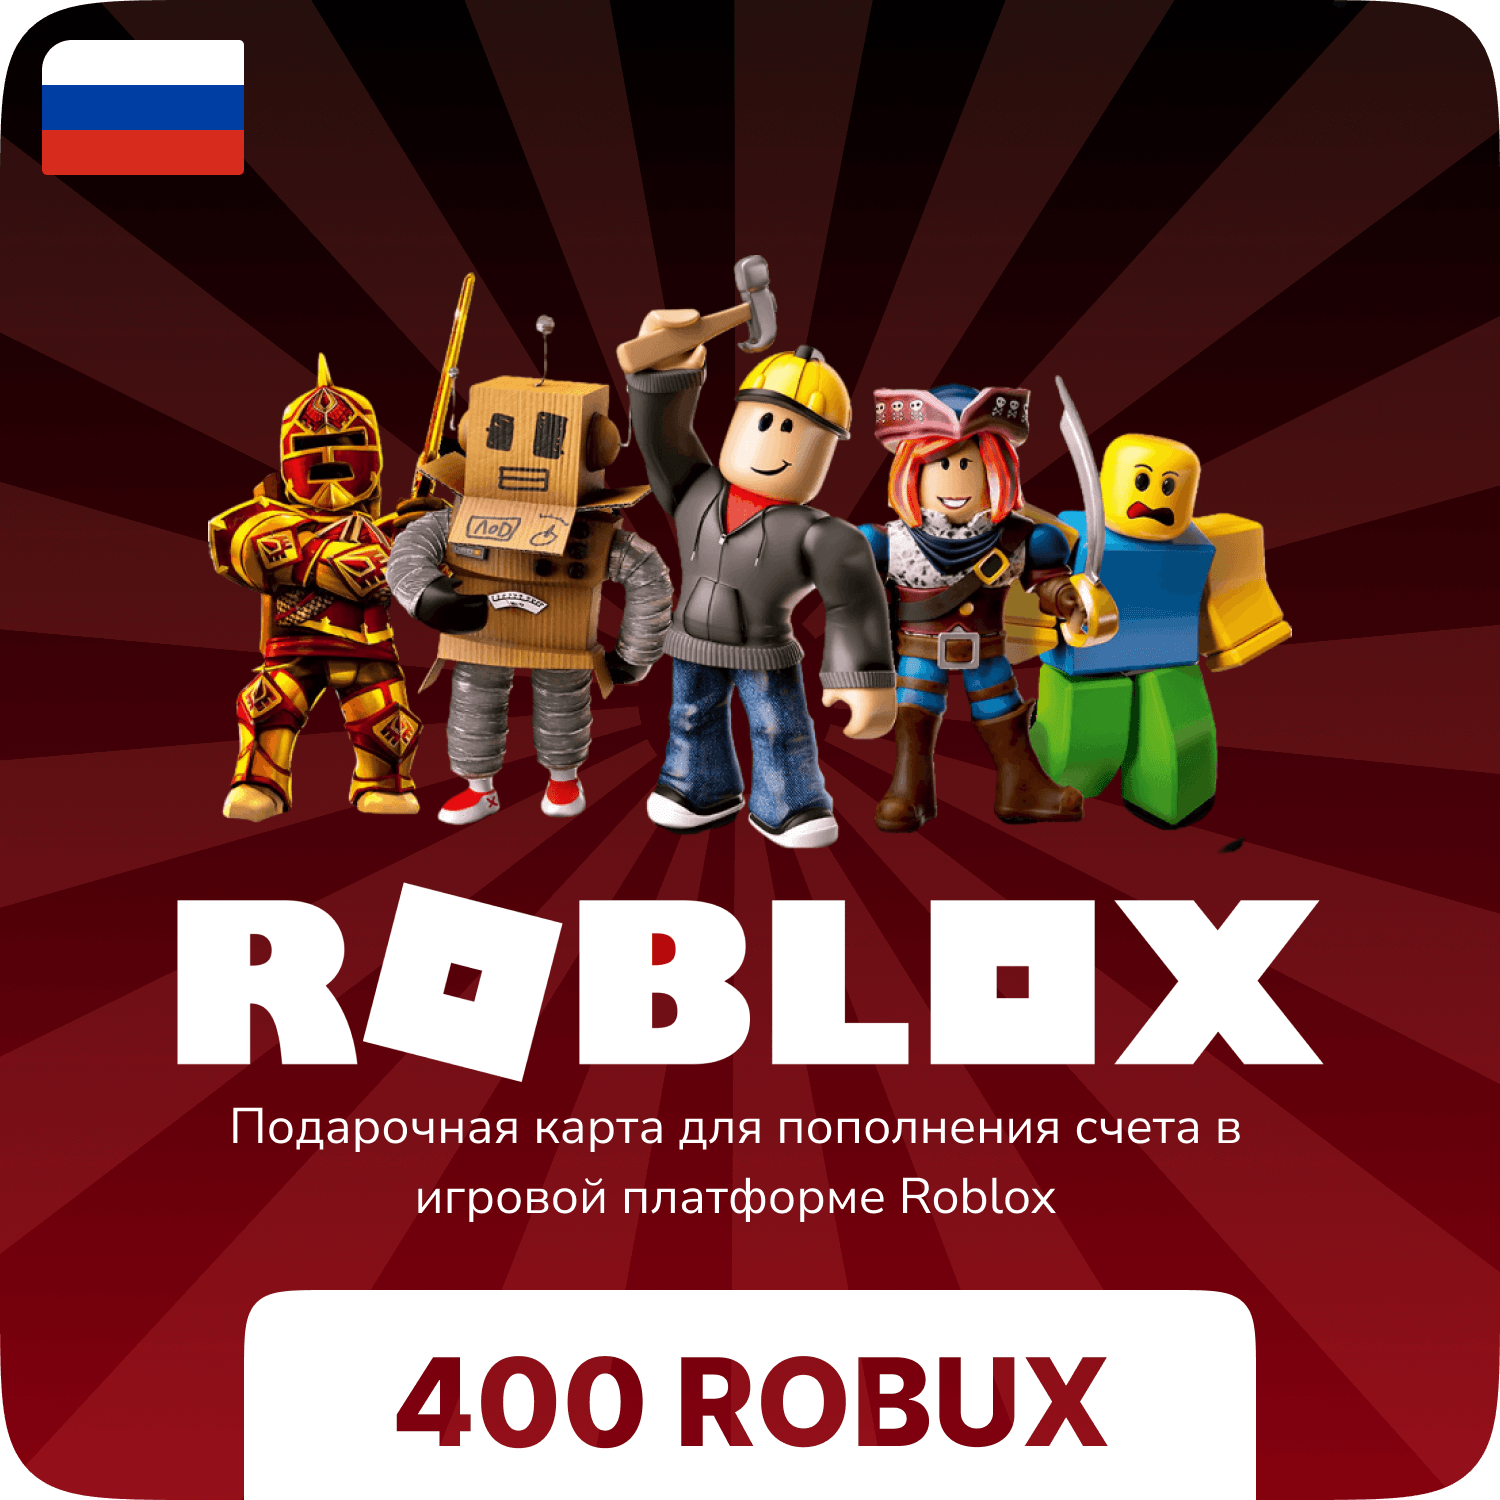 Подарочная карта Roblox - 400 Robux